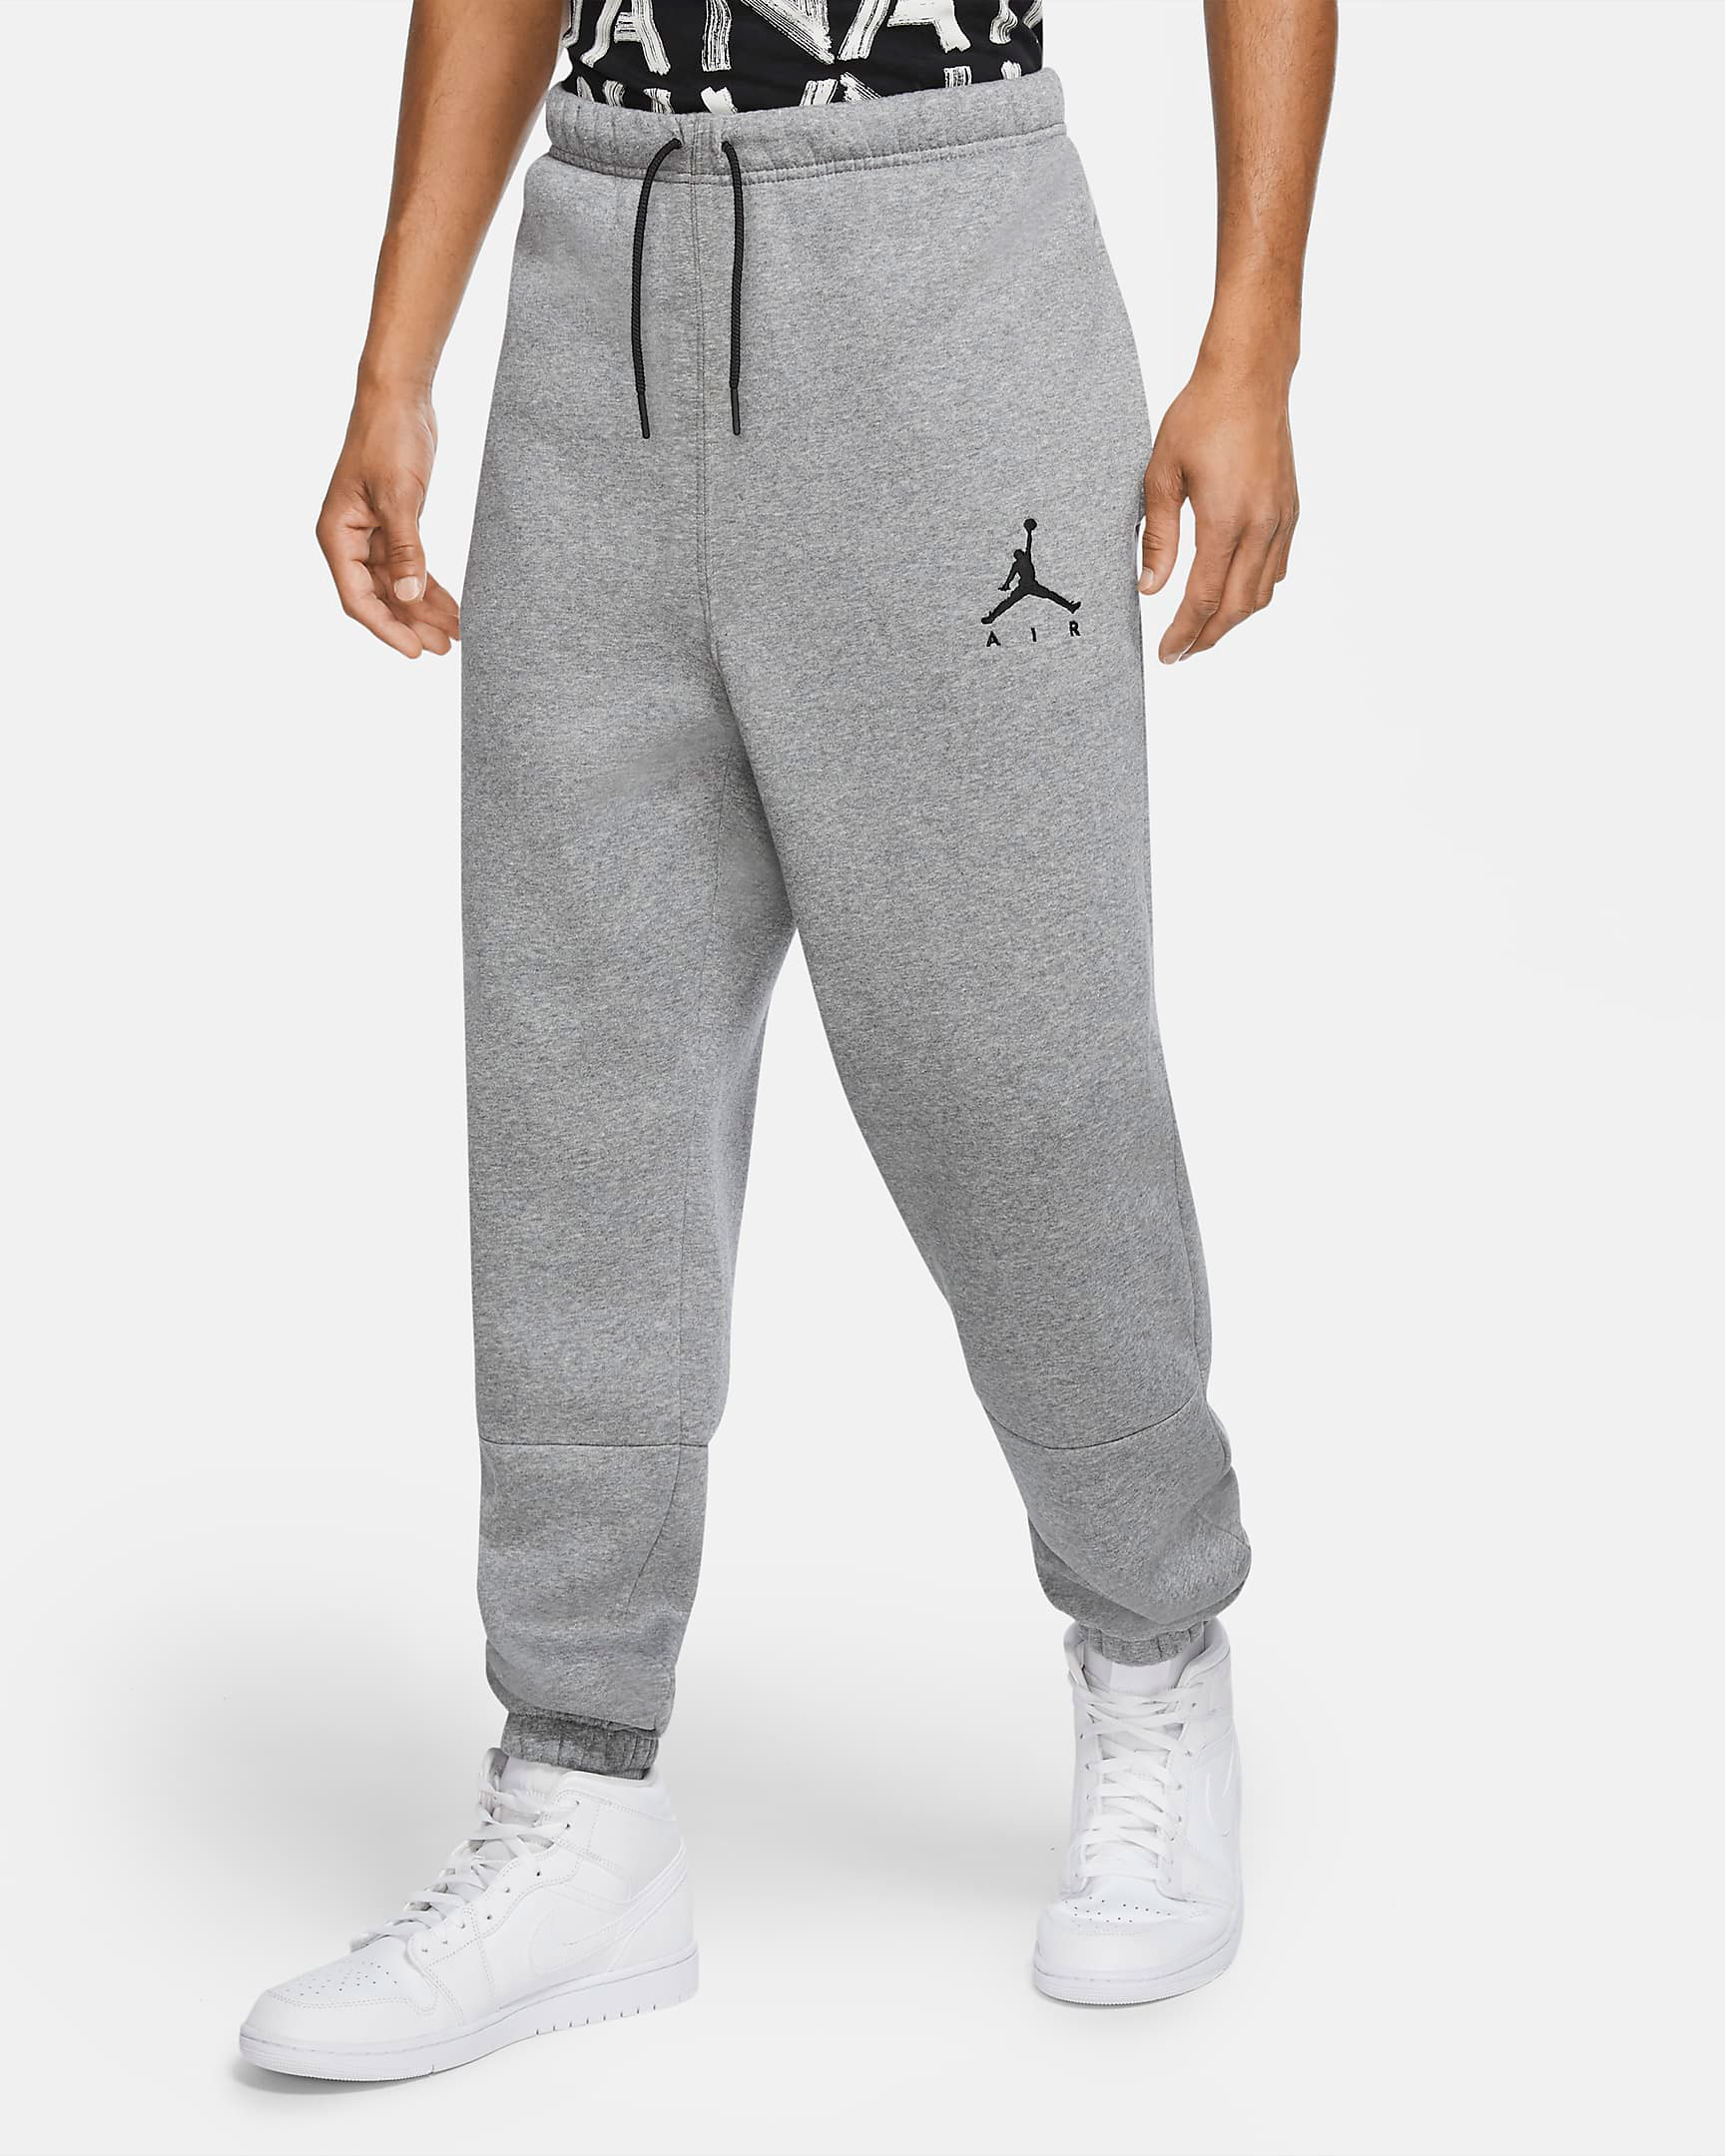 jordan-jumpman-air-hoodie-grey-jogger-pants